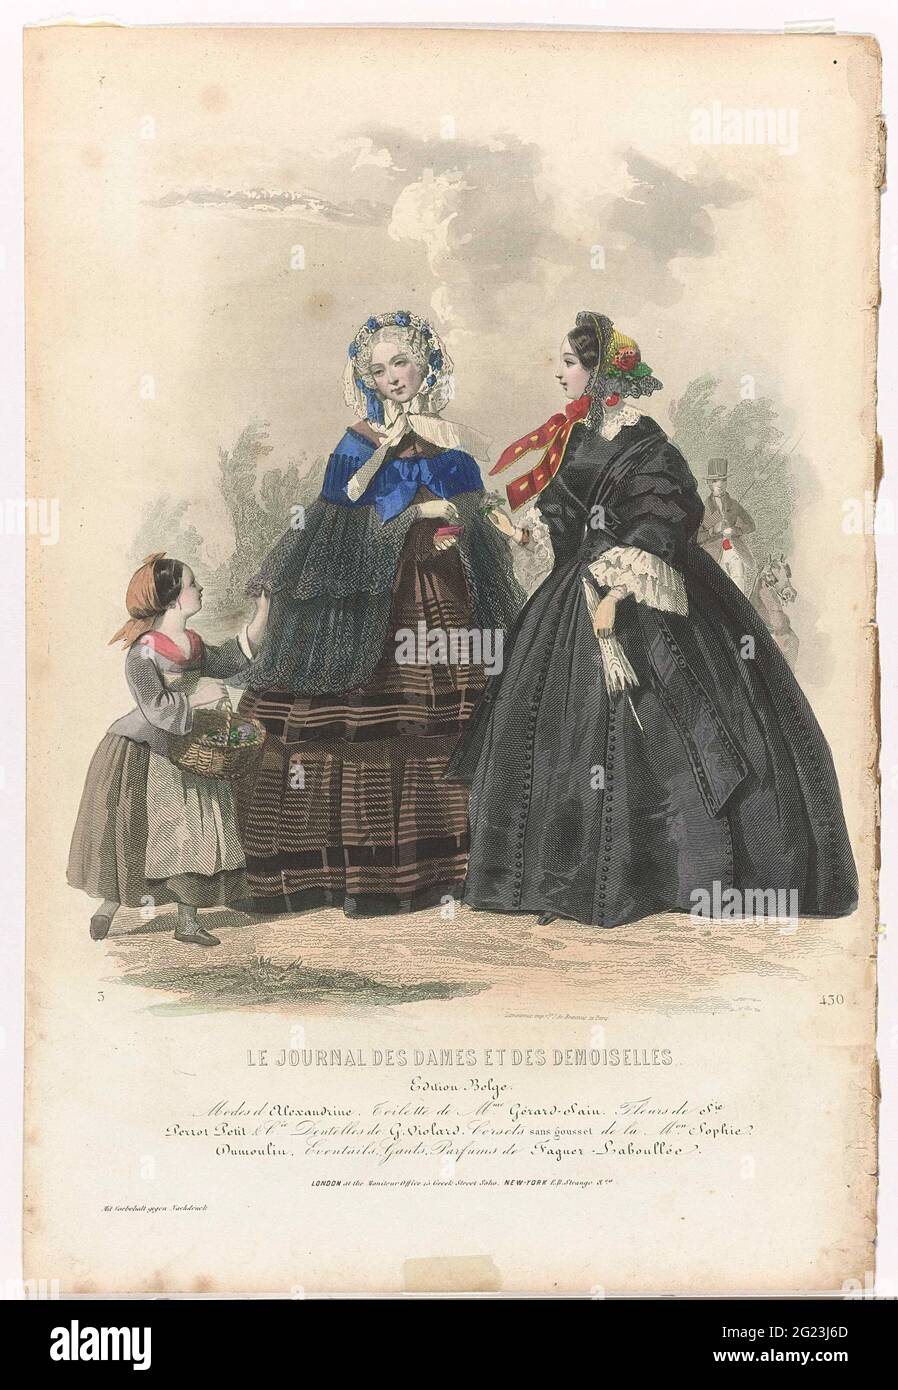 Le Journal des Laden et des Demoiselles, 1855, No. 430, Edition Belge:  Modes d'Alexandrin (...). Two women buy flowers at a flower girl. In the  background a rider on horseback. Left: Blue